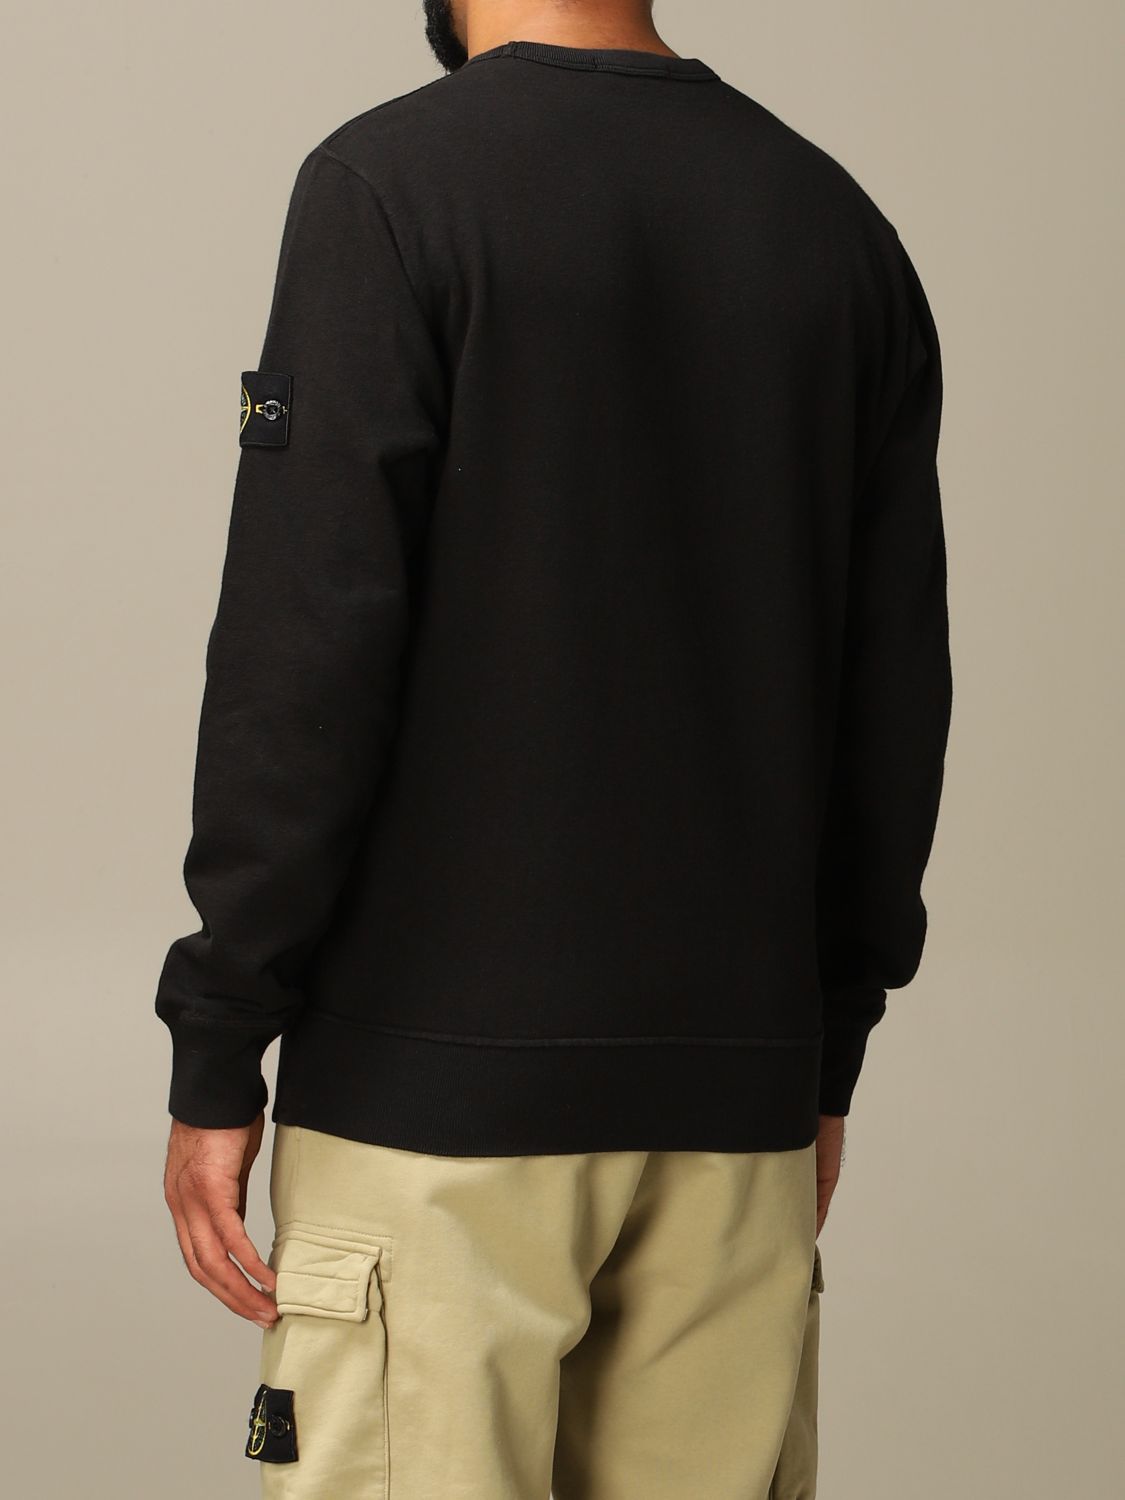 STONE ISLAND: with logo and pocket - Black | Stone Island sweatshirt MO721563560 on GIGLIO.COM